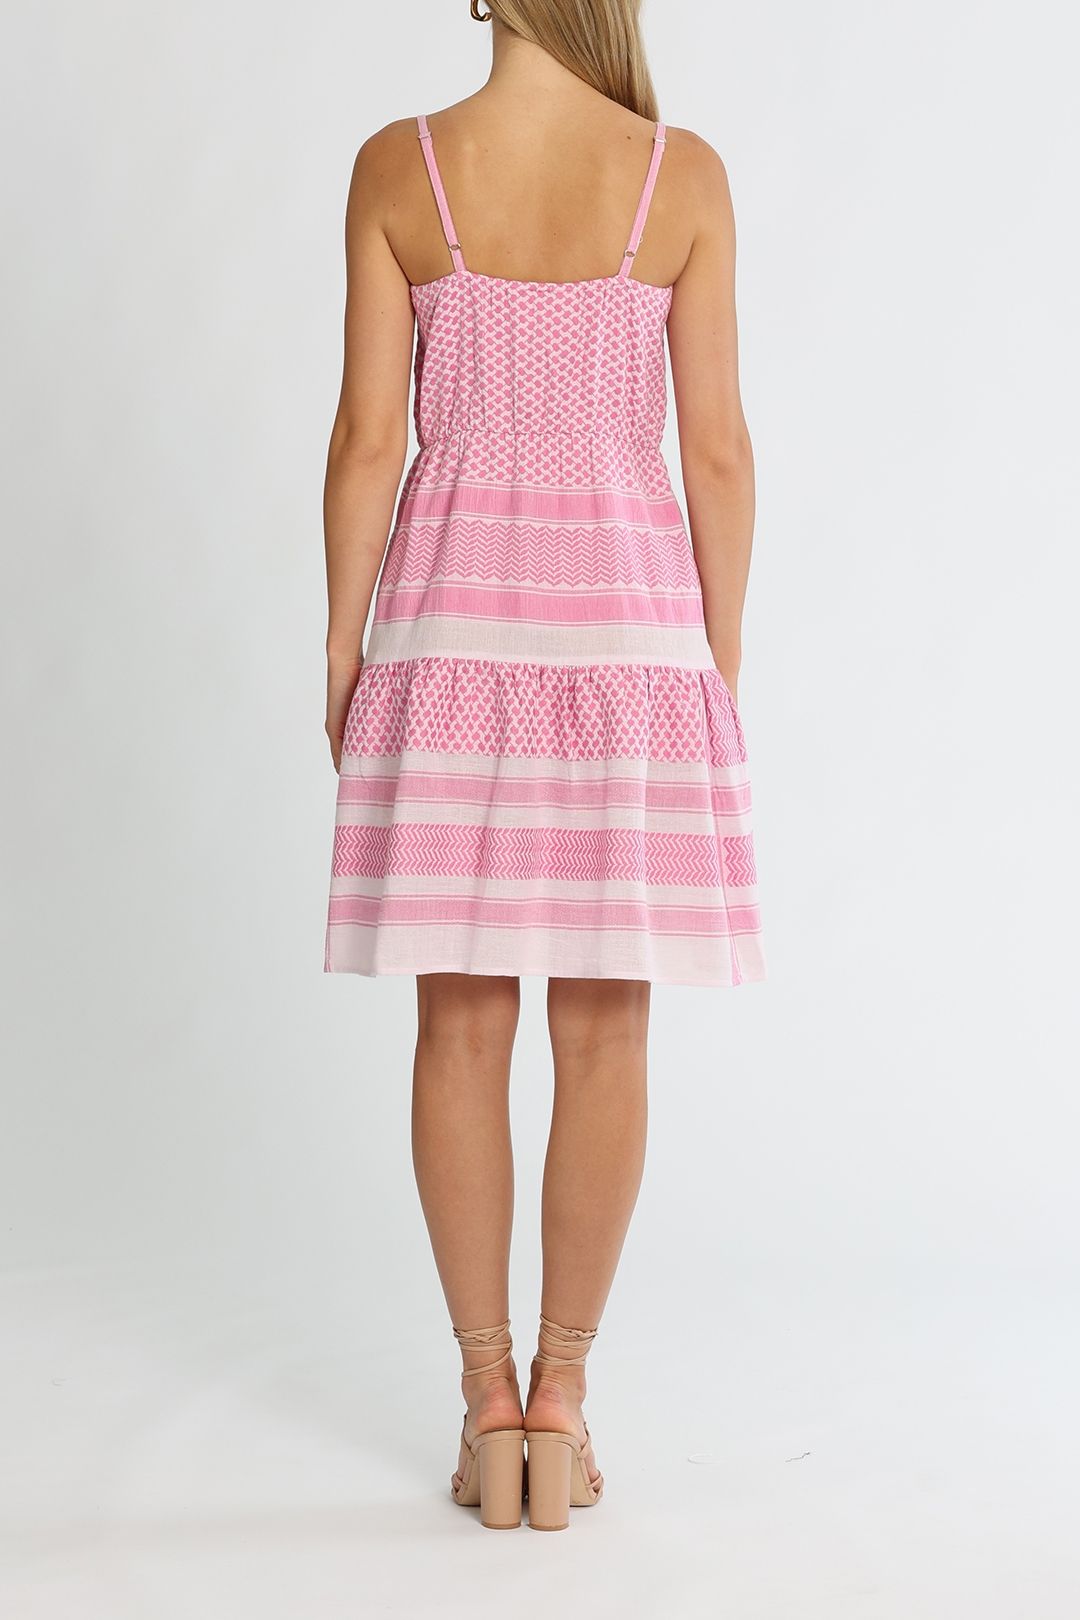 Summery Copenhagen Rose Sleeveless Short Dress Super Pink Scoop Neck